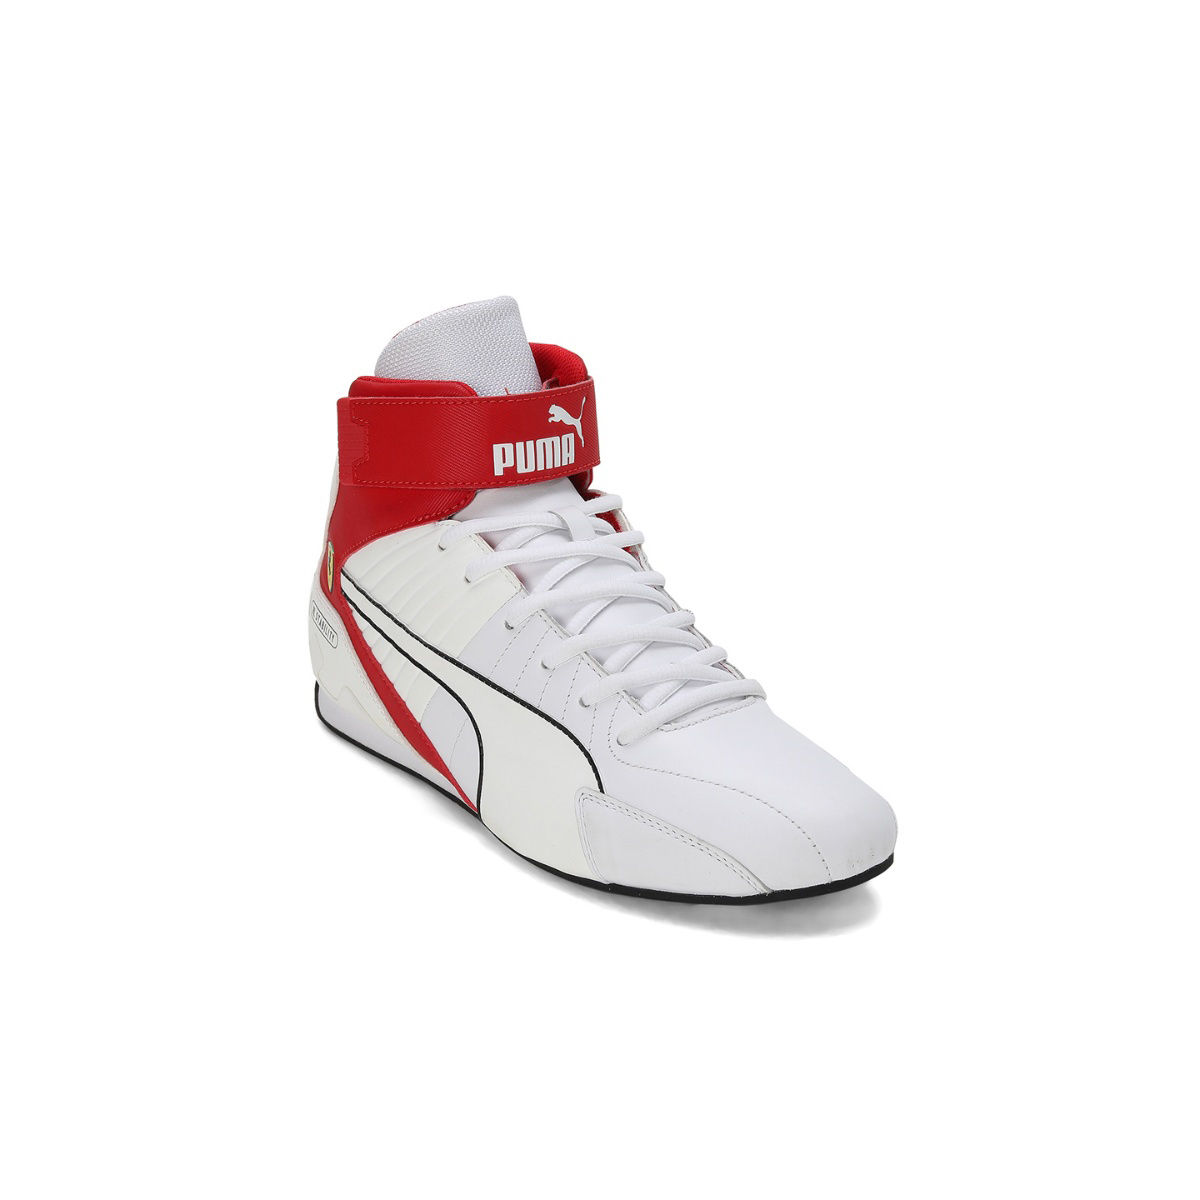 Puma Men White Sneakers Casual Shoes - Buy Puma Men White Sneakers Casual  Shoes online in India